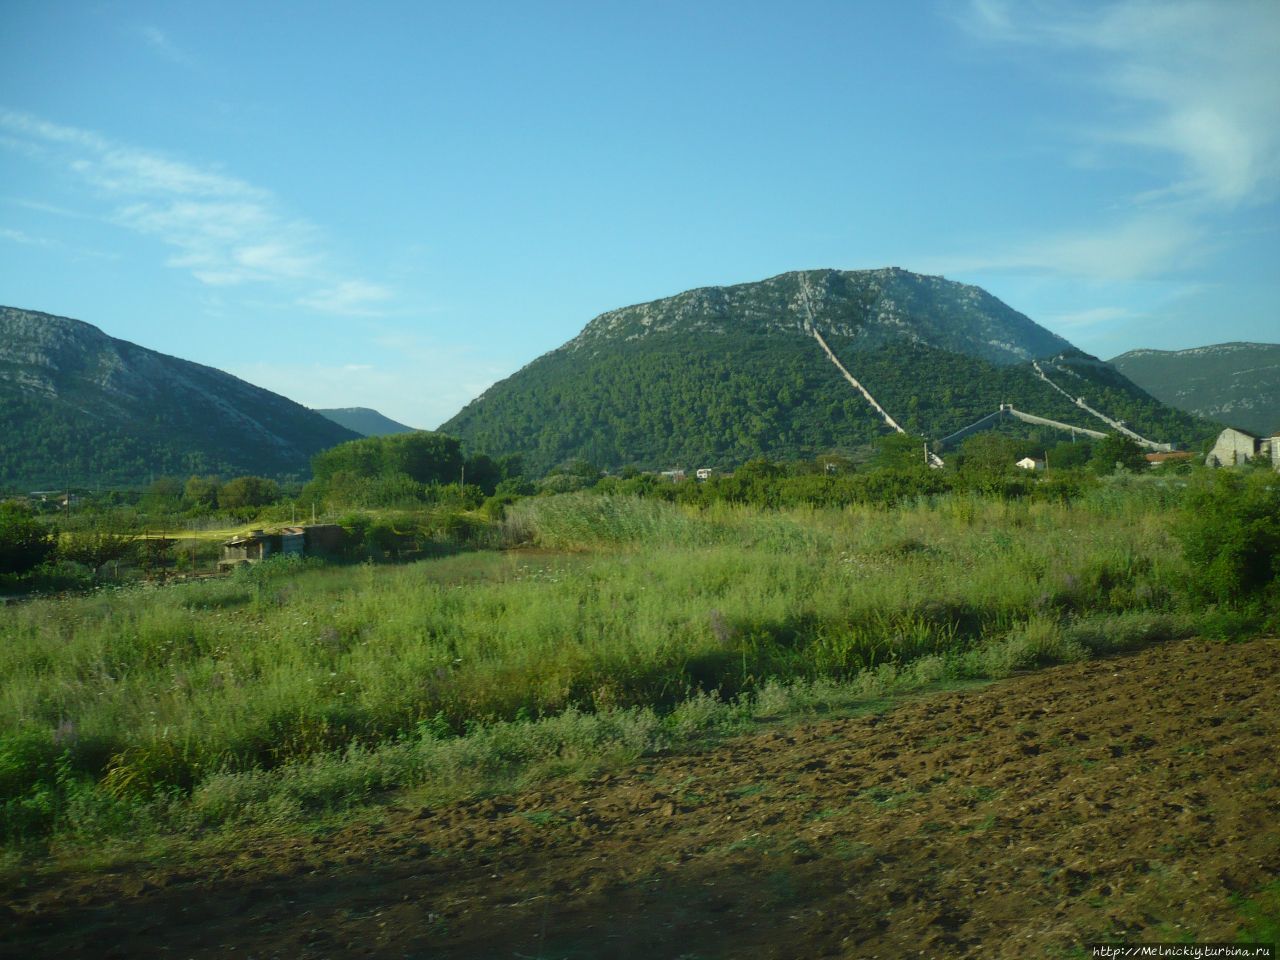 Крепостная стена Стона Стон, Хорватия